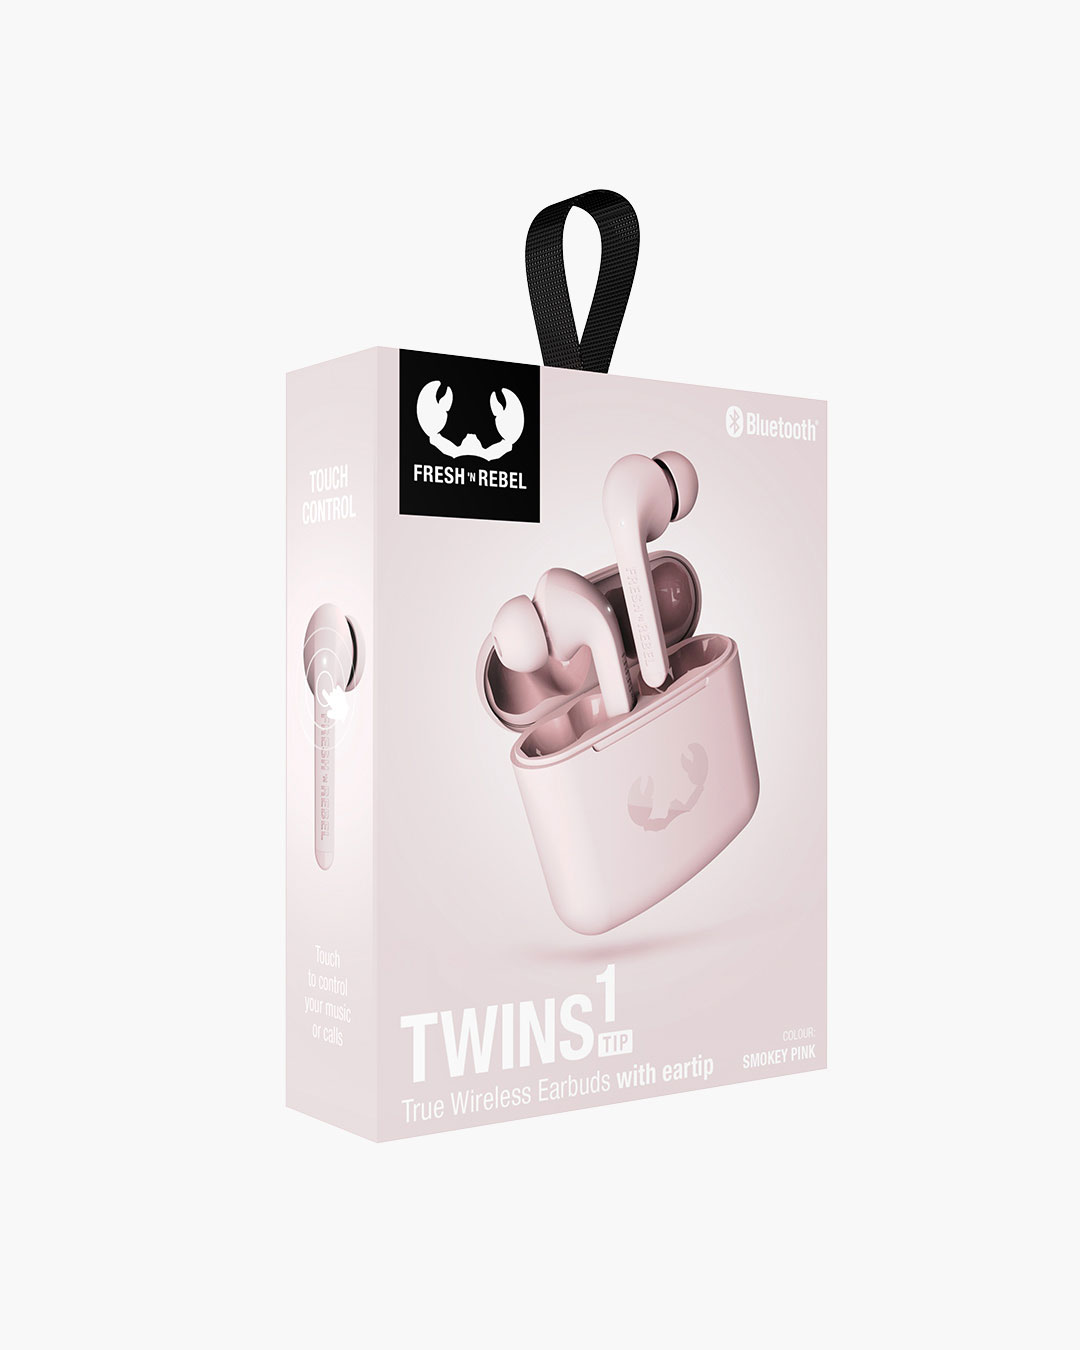 Fresh 'n Rebel - Twins 1 - True Wireless In-ear headphones with ear tip - Smokey Pink